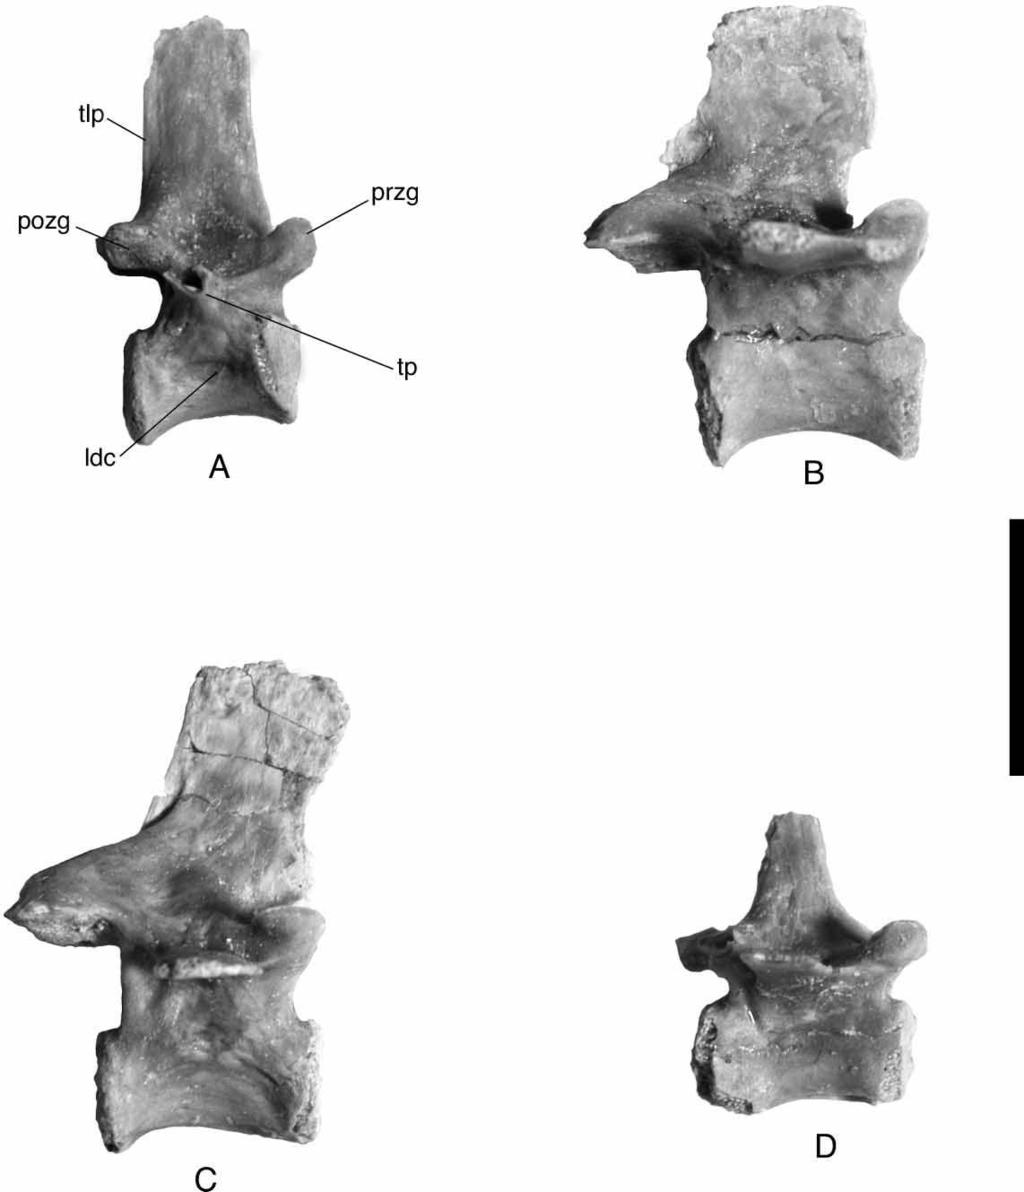 310 A. H. Turner Figure 63. Araripesuchus tsangatsangana. Comparison of isolated vertebrae in right lateral view. A, Anterior dorsal vertebra, FMNH PR 2306. B, Mid-dorsal vertebra, FMNH PR 2305.